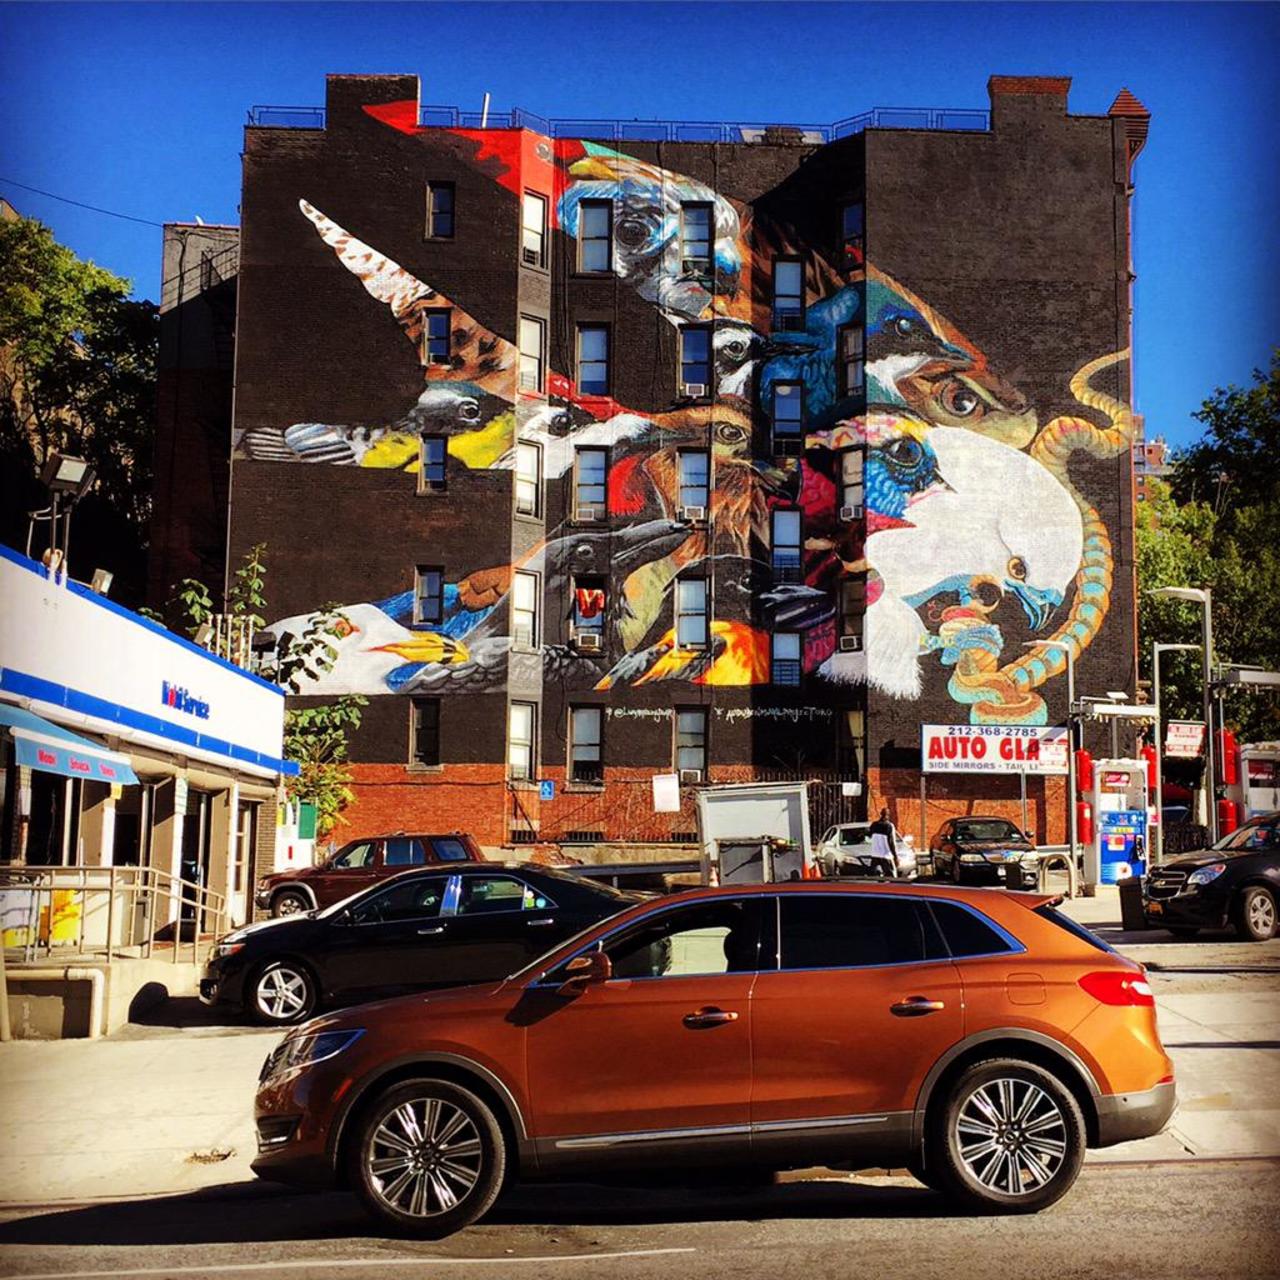 #Bella is a work of art... @LincolnMotorCo #lincolnmkx #Art #StreetArt #Graffiti #Auto http://t.co/7YhrbJIXd6